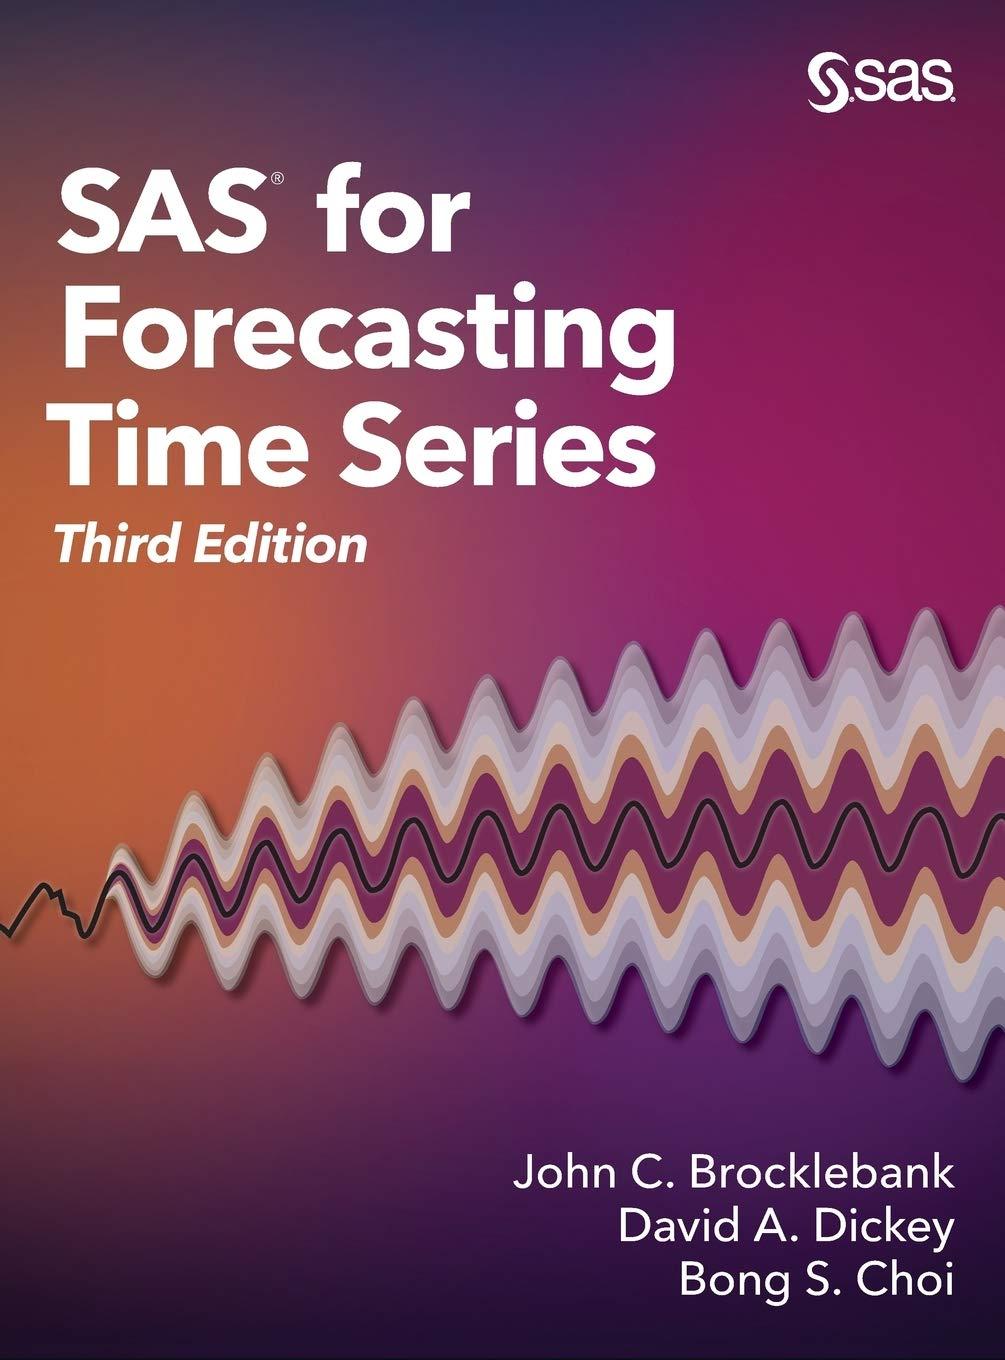 sas for forecasting time series 3rd edition john c. brocklebank, david a. dickey, bong choi 1635269008,